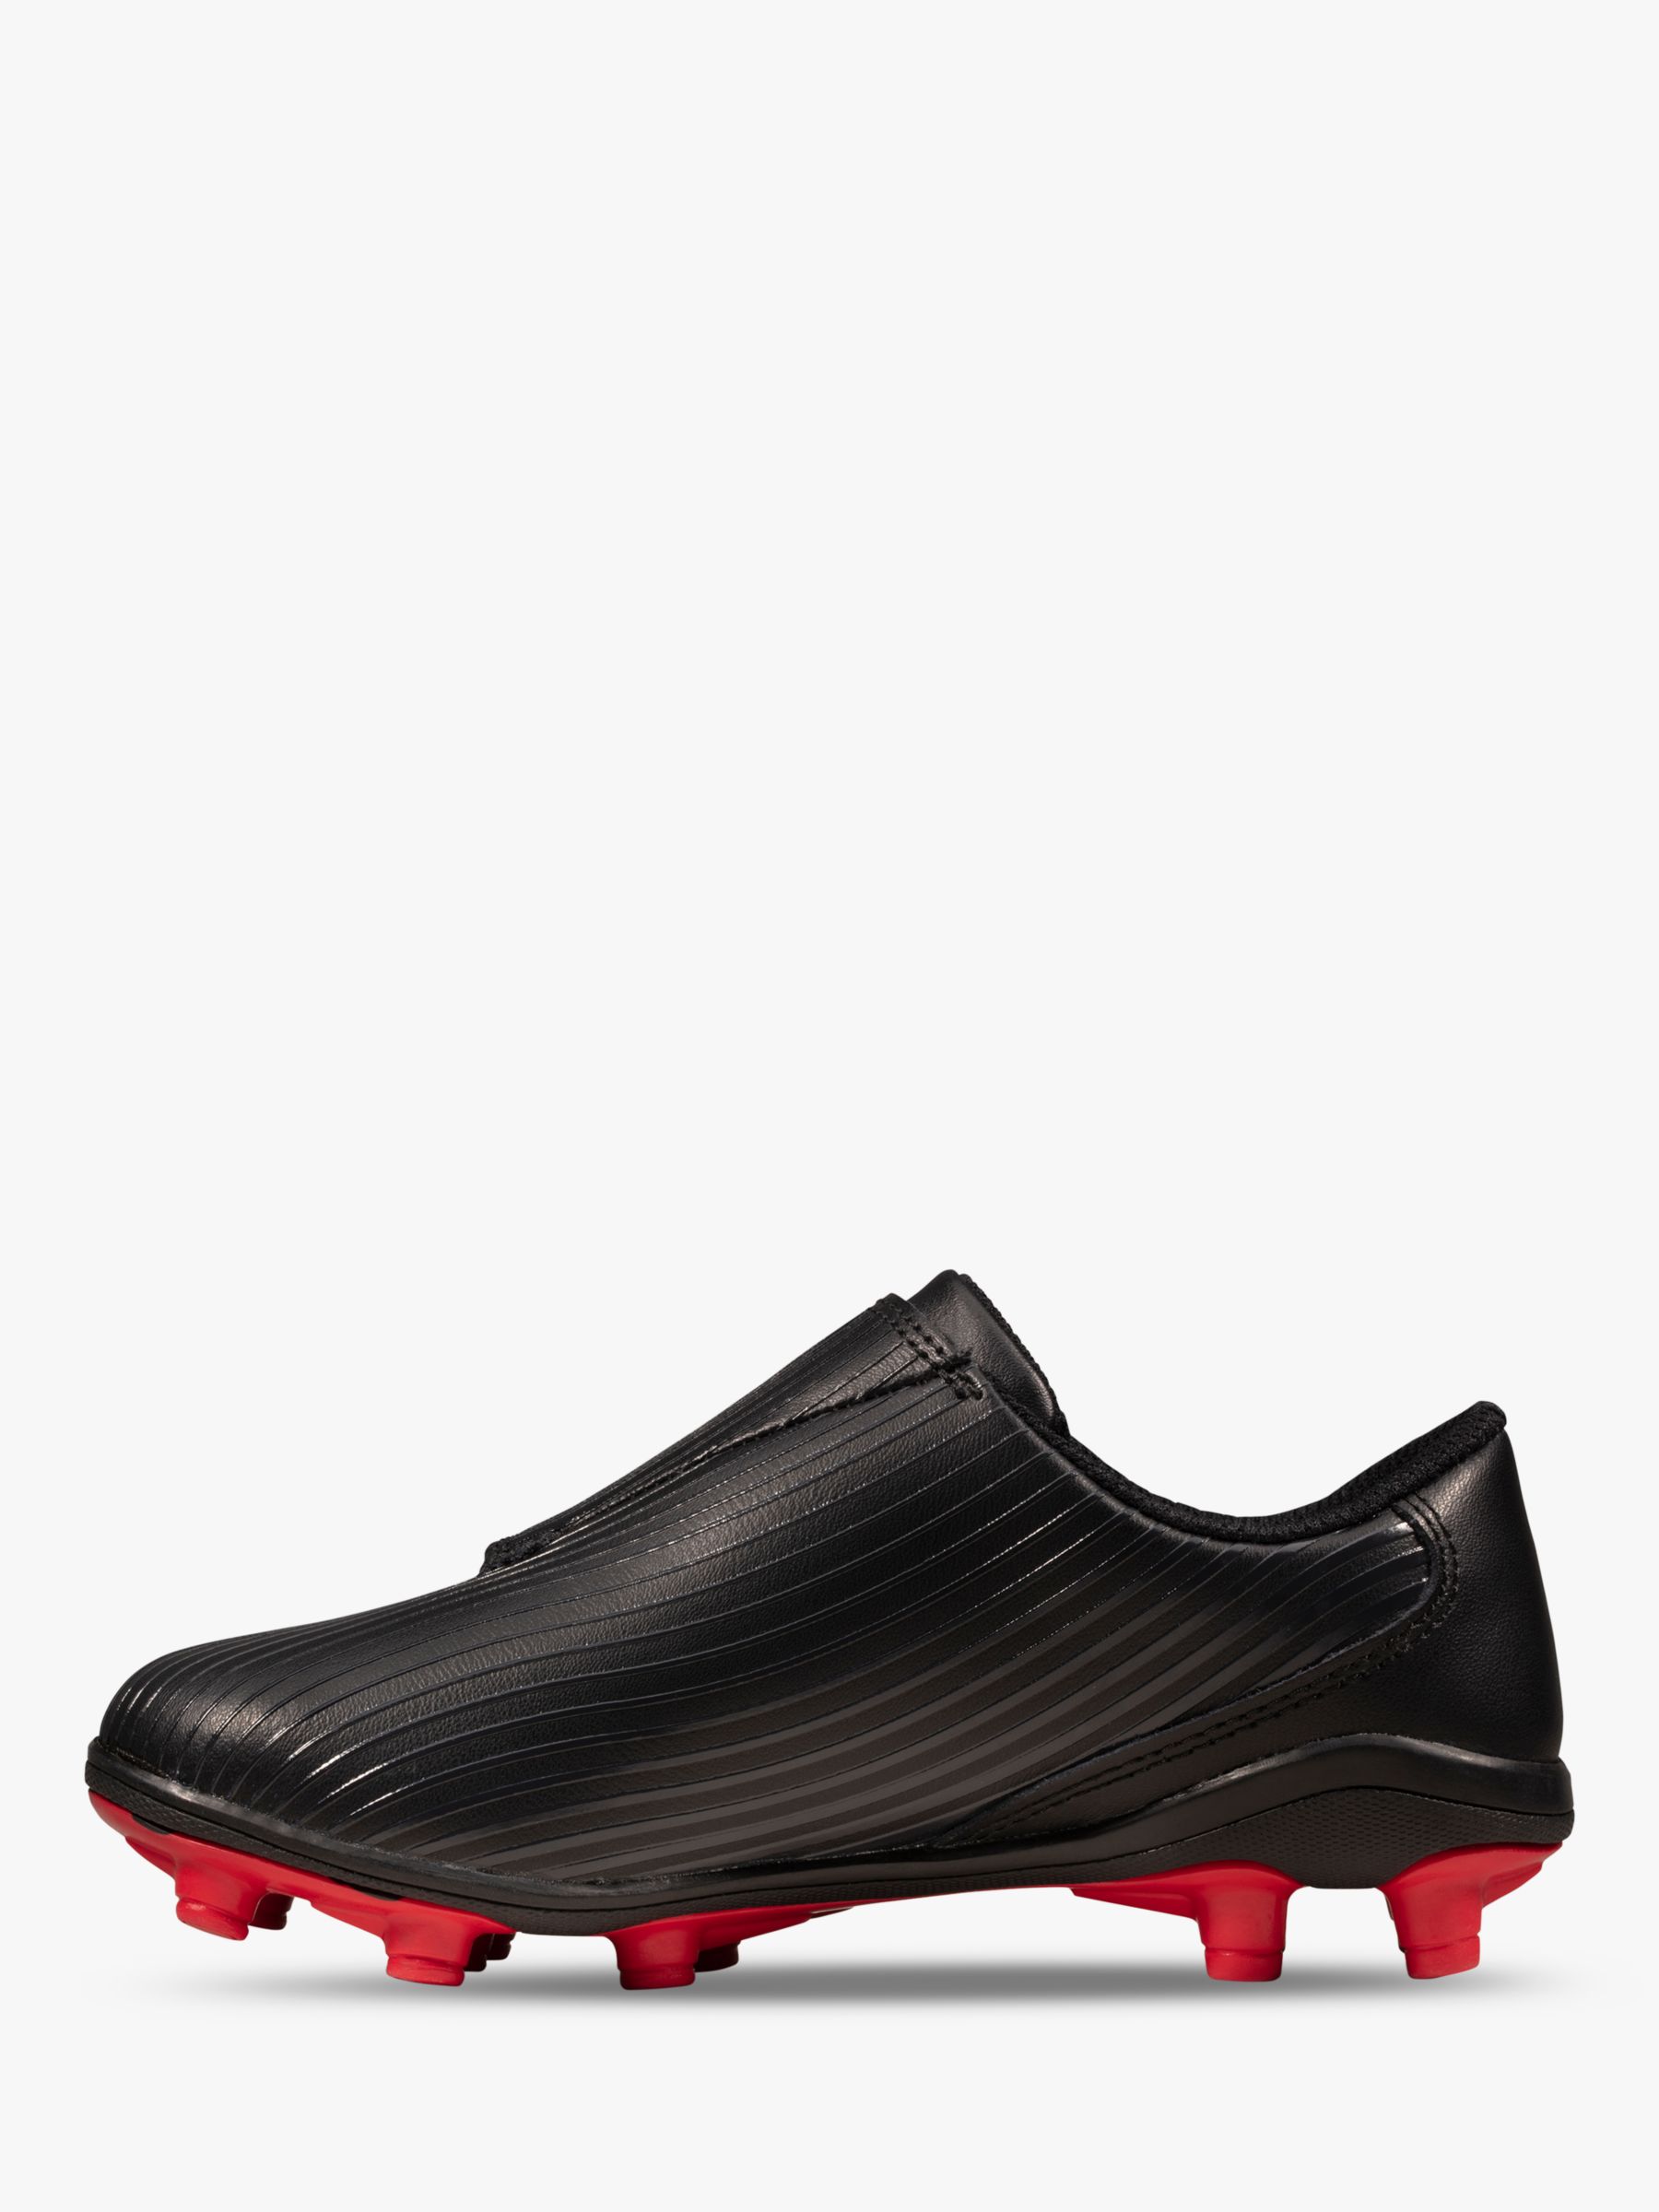 clarks velcro football boots